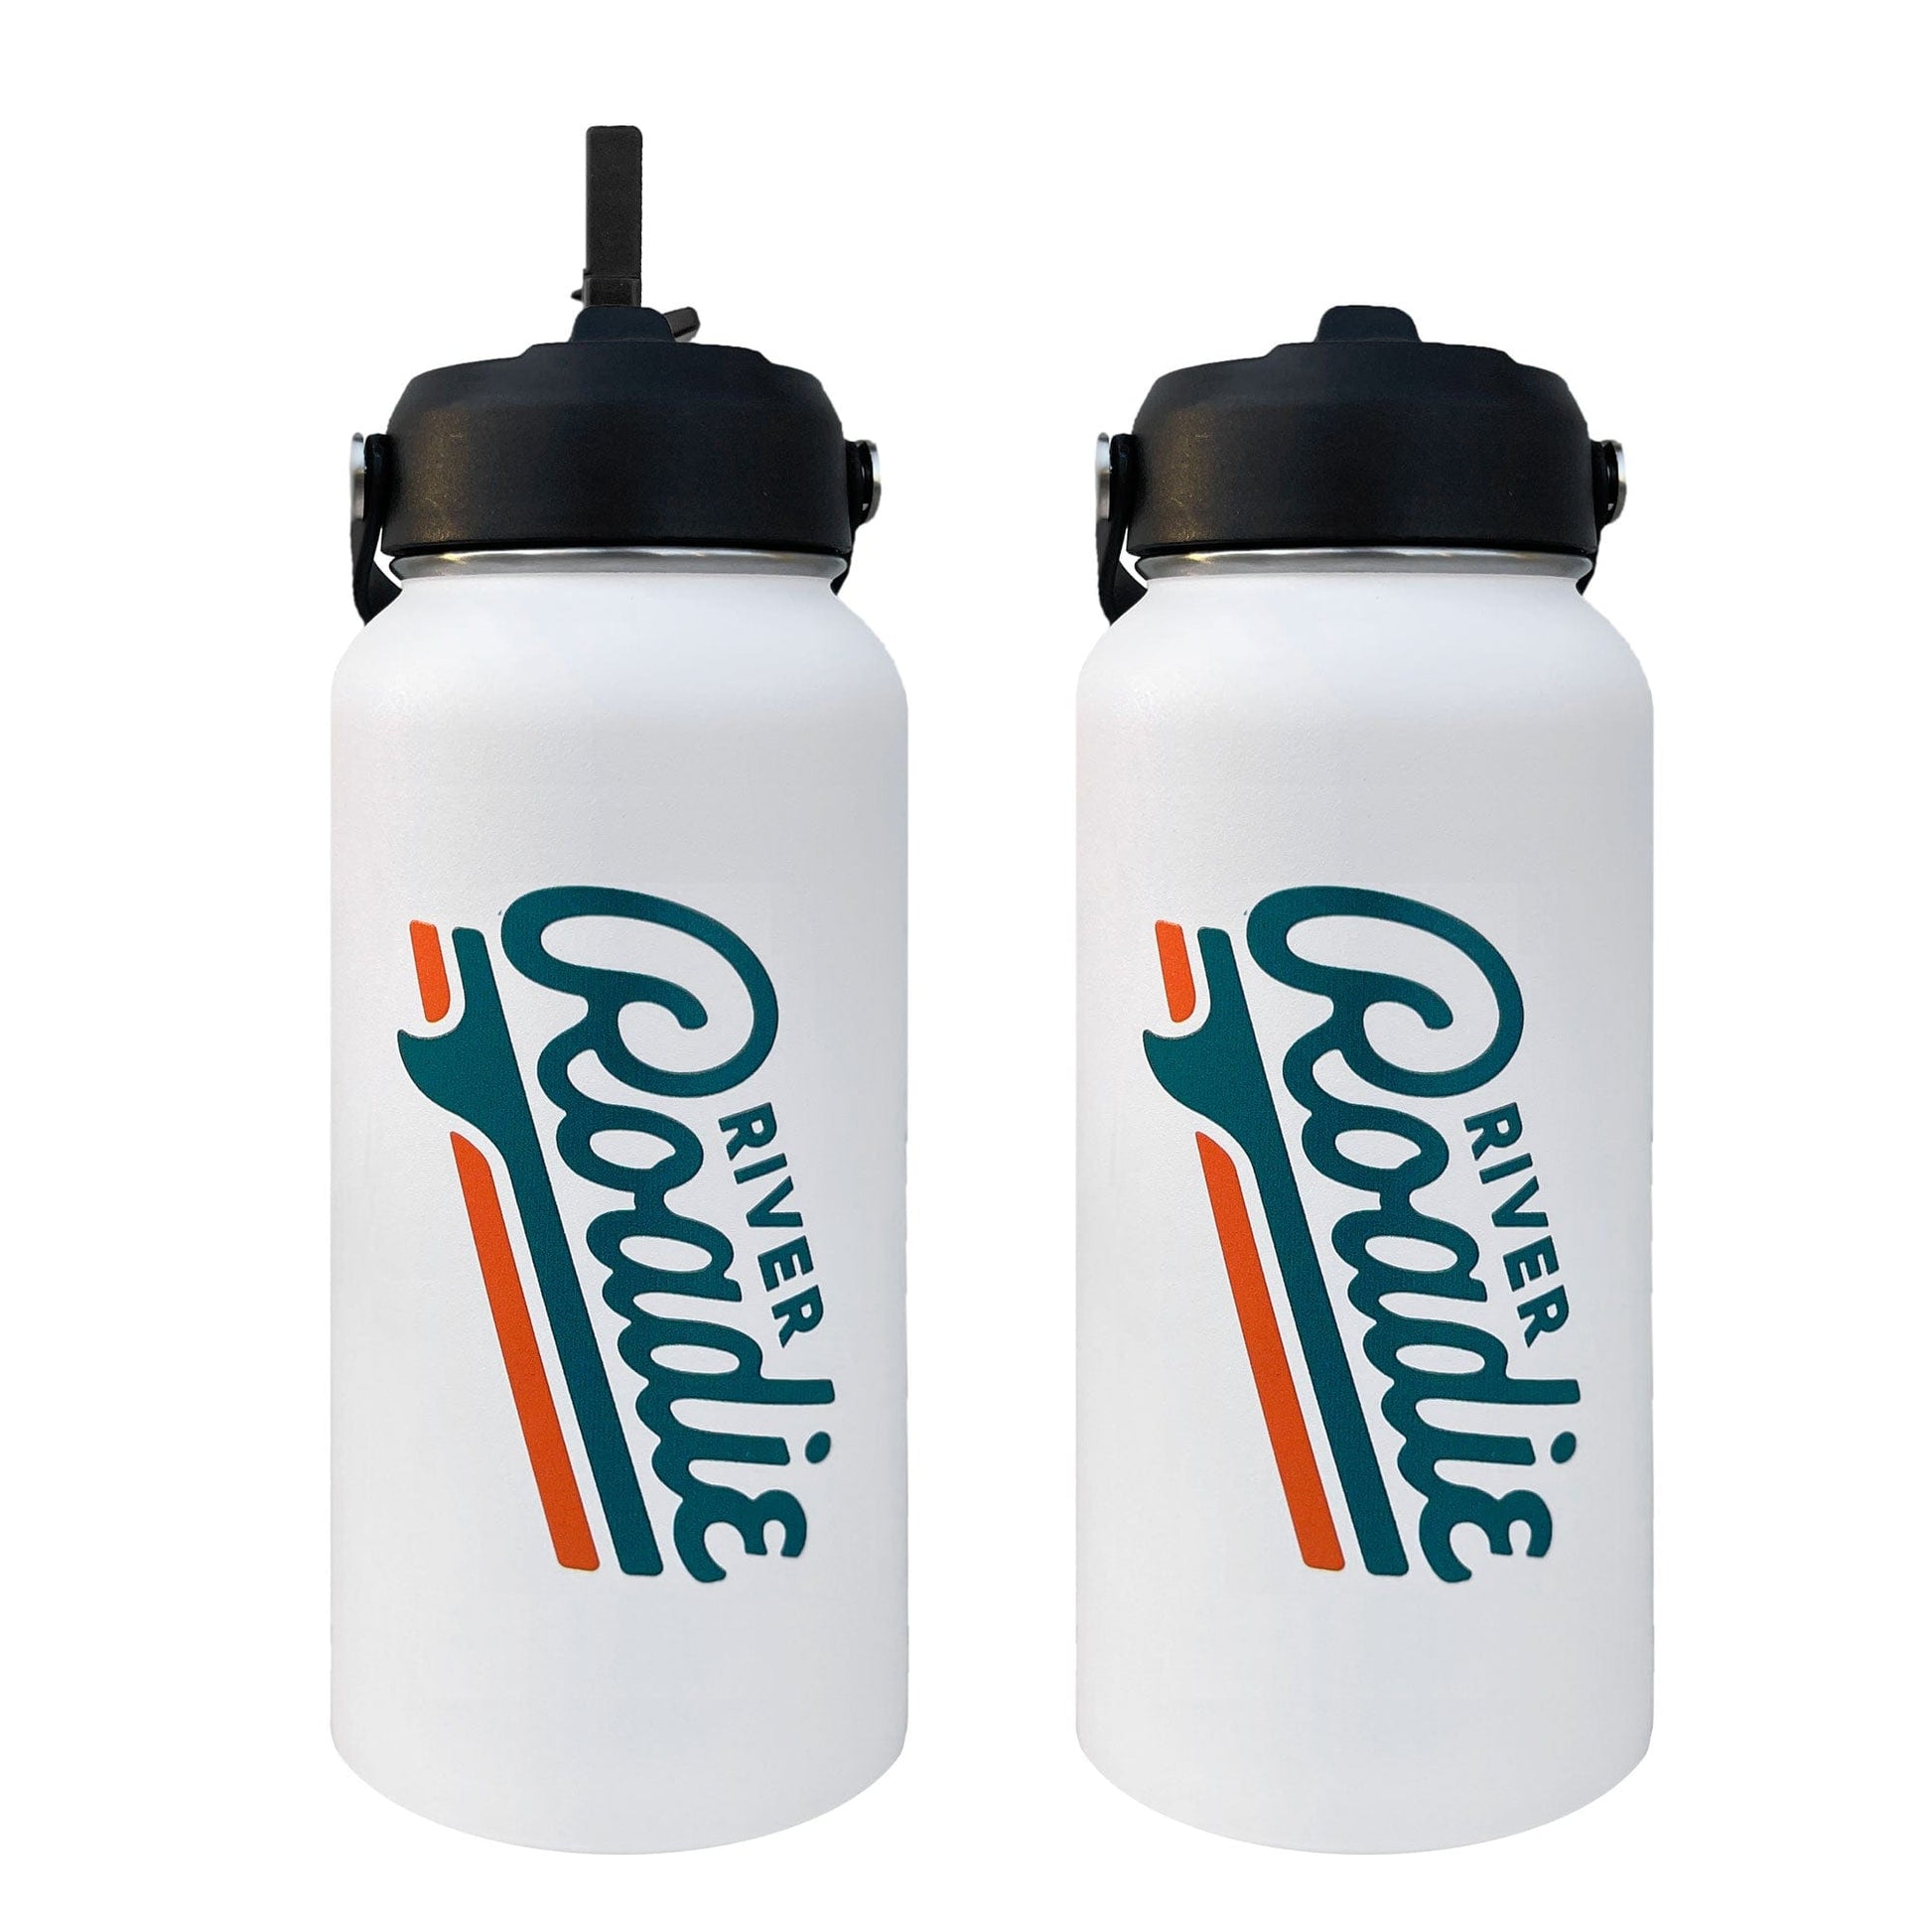 RIVER ROAD CLOTHING Drinkware & Accessories River Roadie Water Bottle